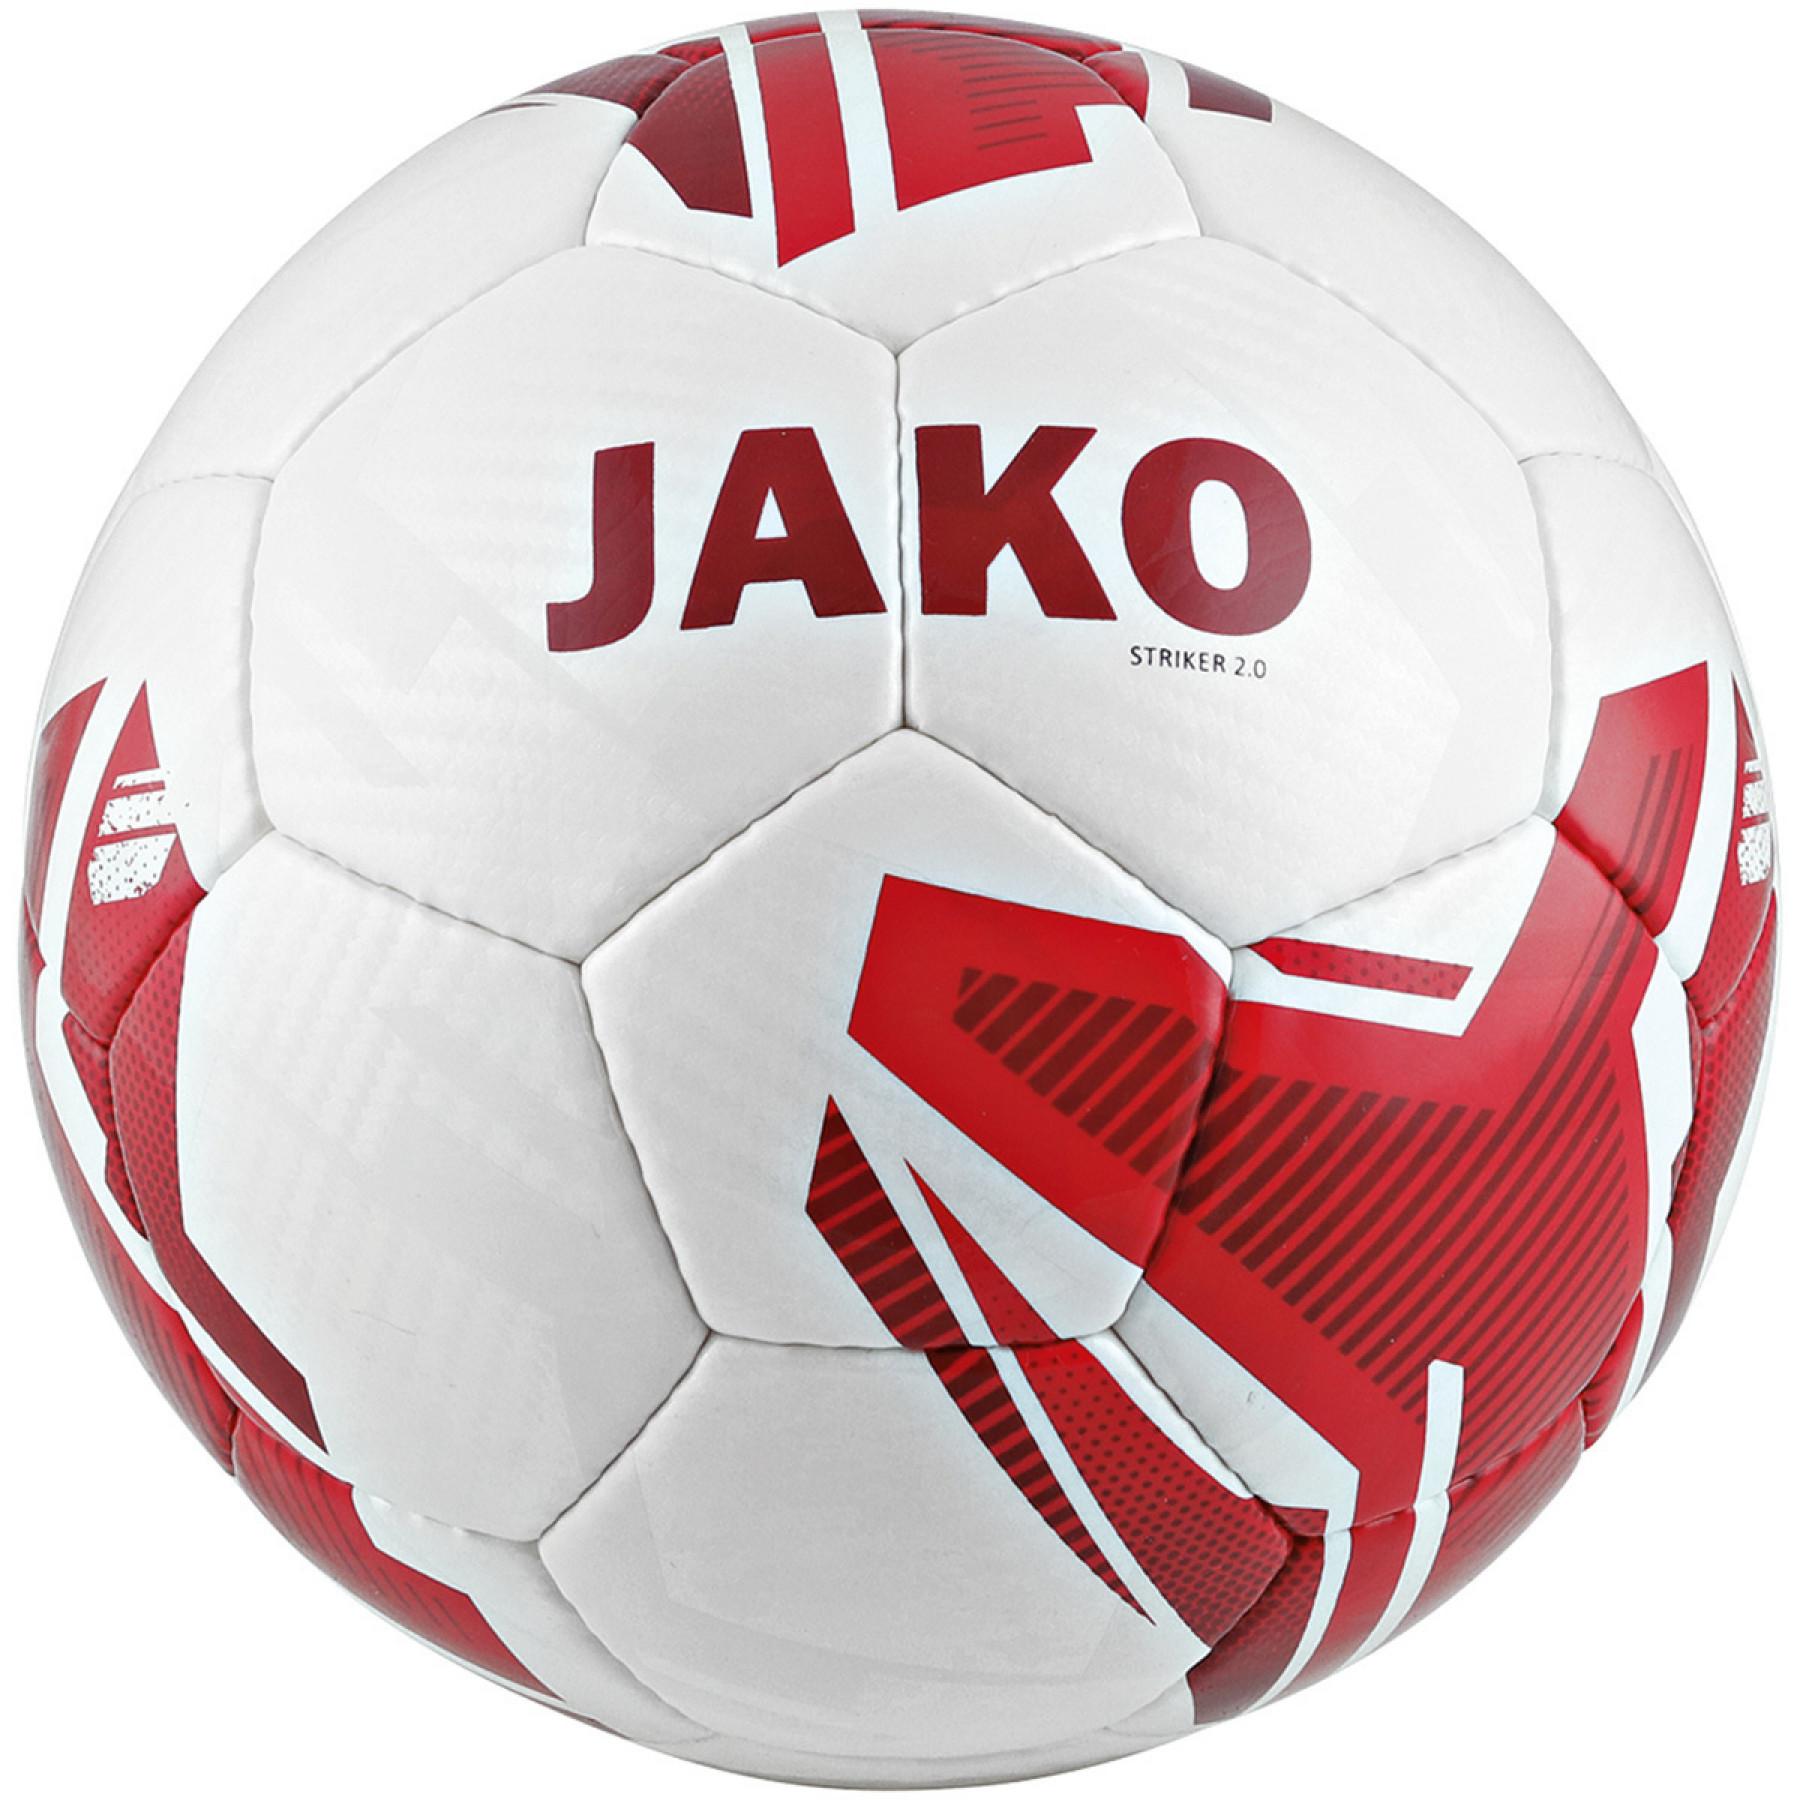 Ballong Jako Striker 2.0 entraînement